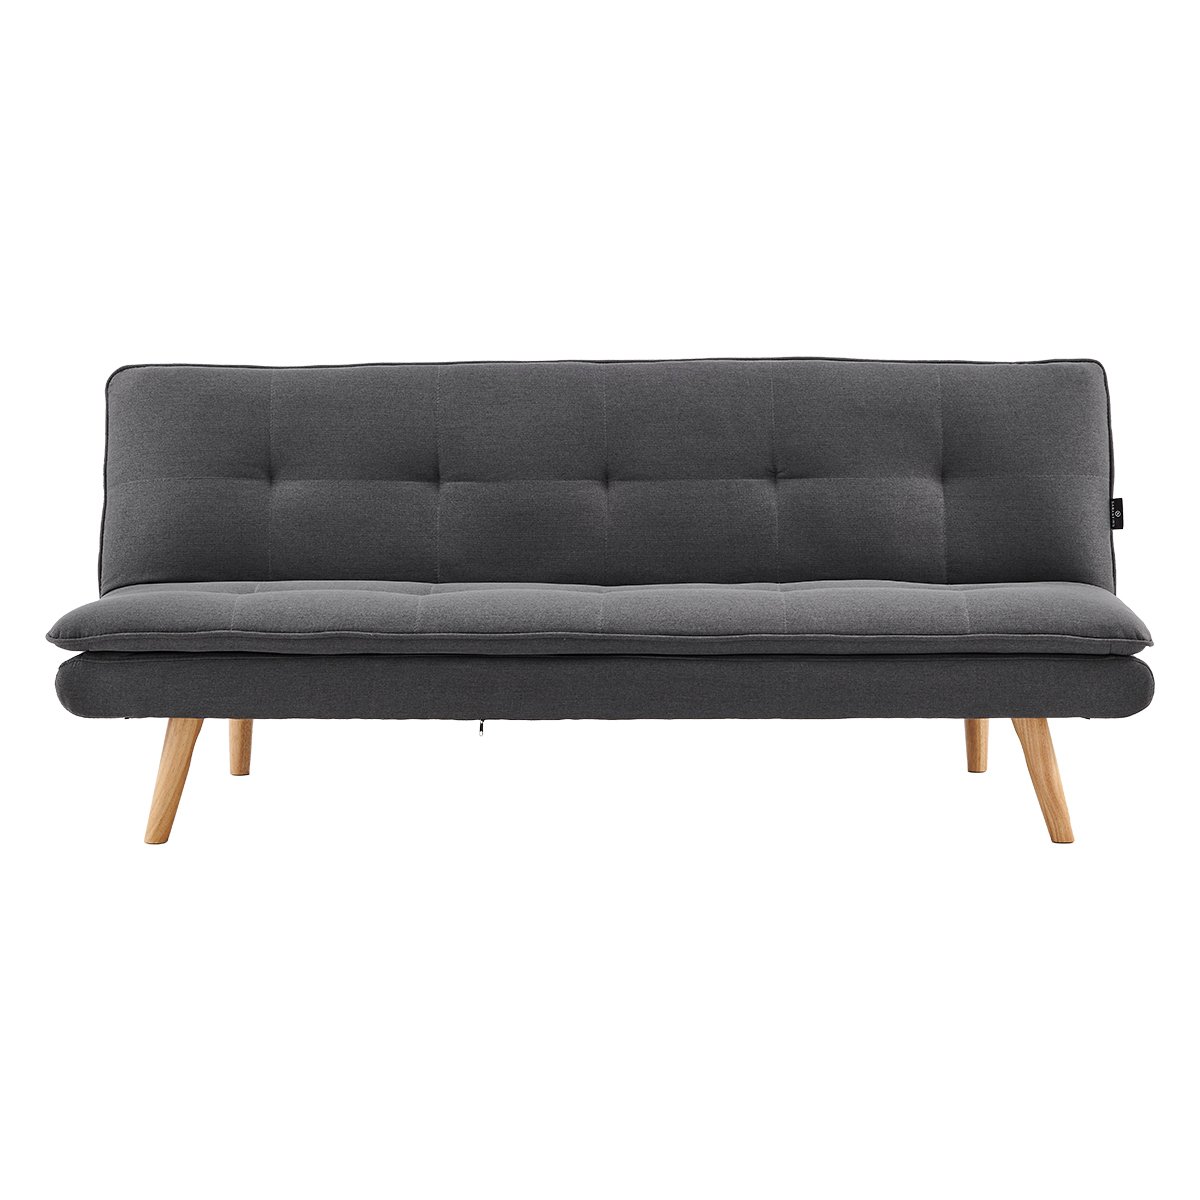 Sarantino 3 Seater Linen Sofa Bed Couch Lounge Futon - Dark Grey 1